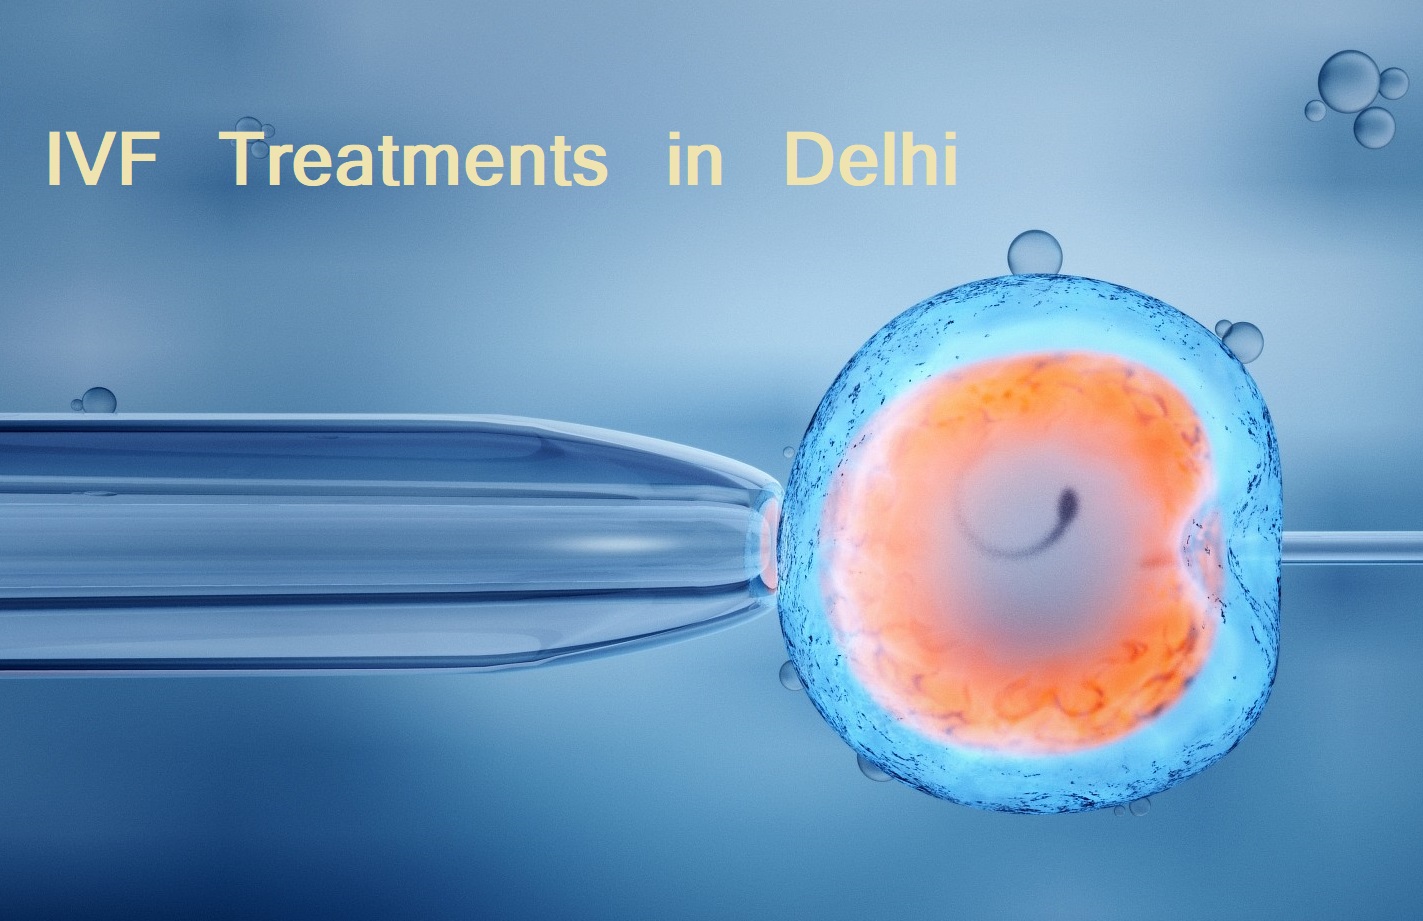 IVF TREATMENTS IN DELHI